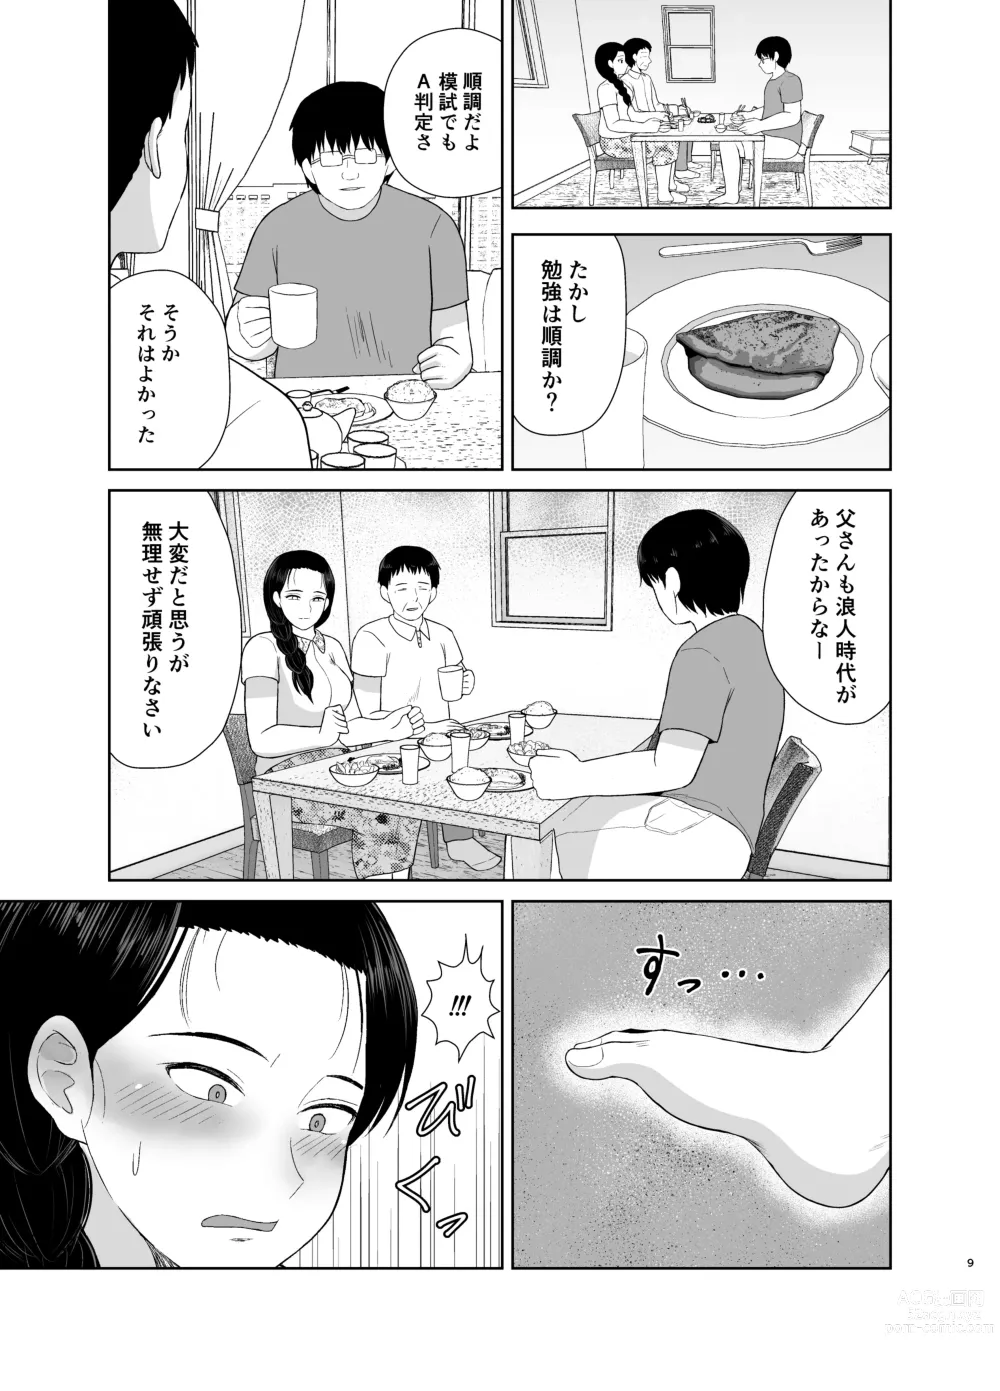 Page 9 of doujinshi Haha wa Omocha 2